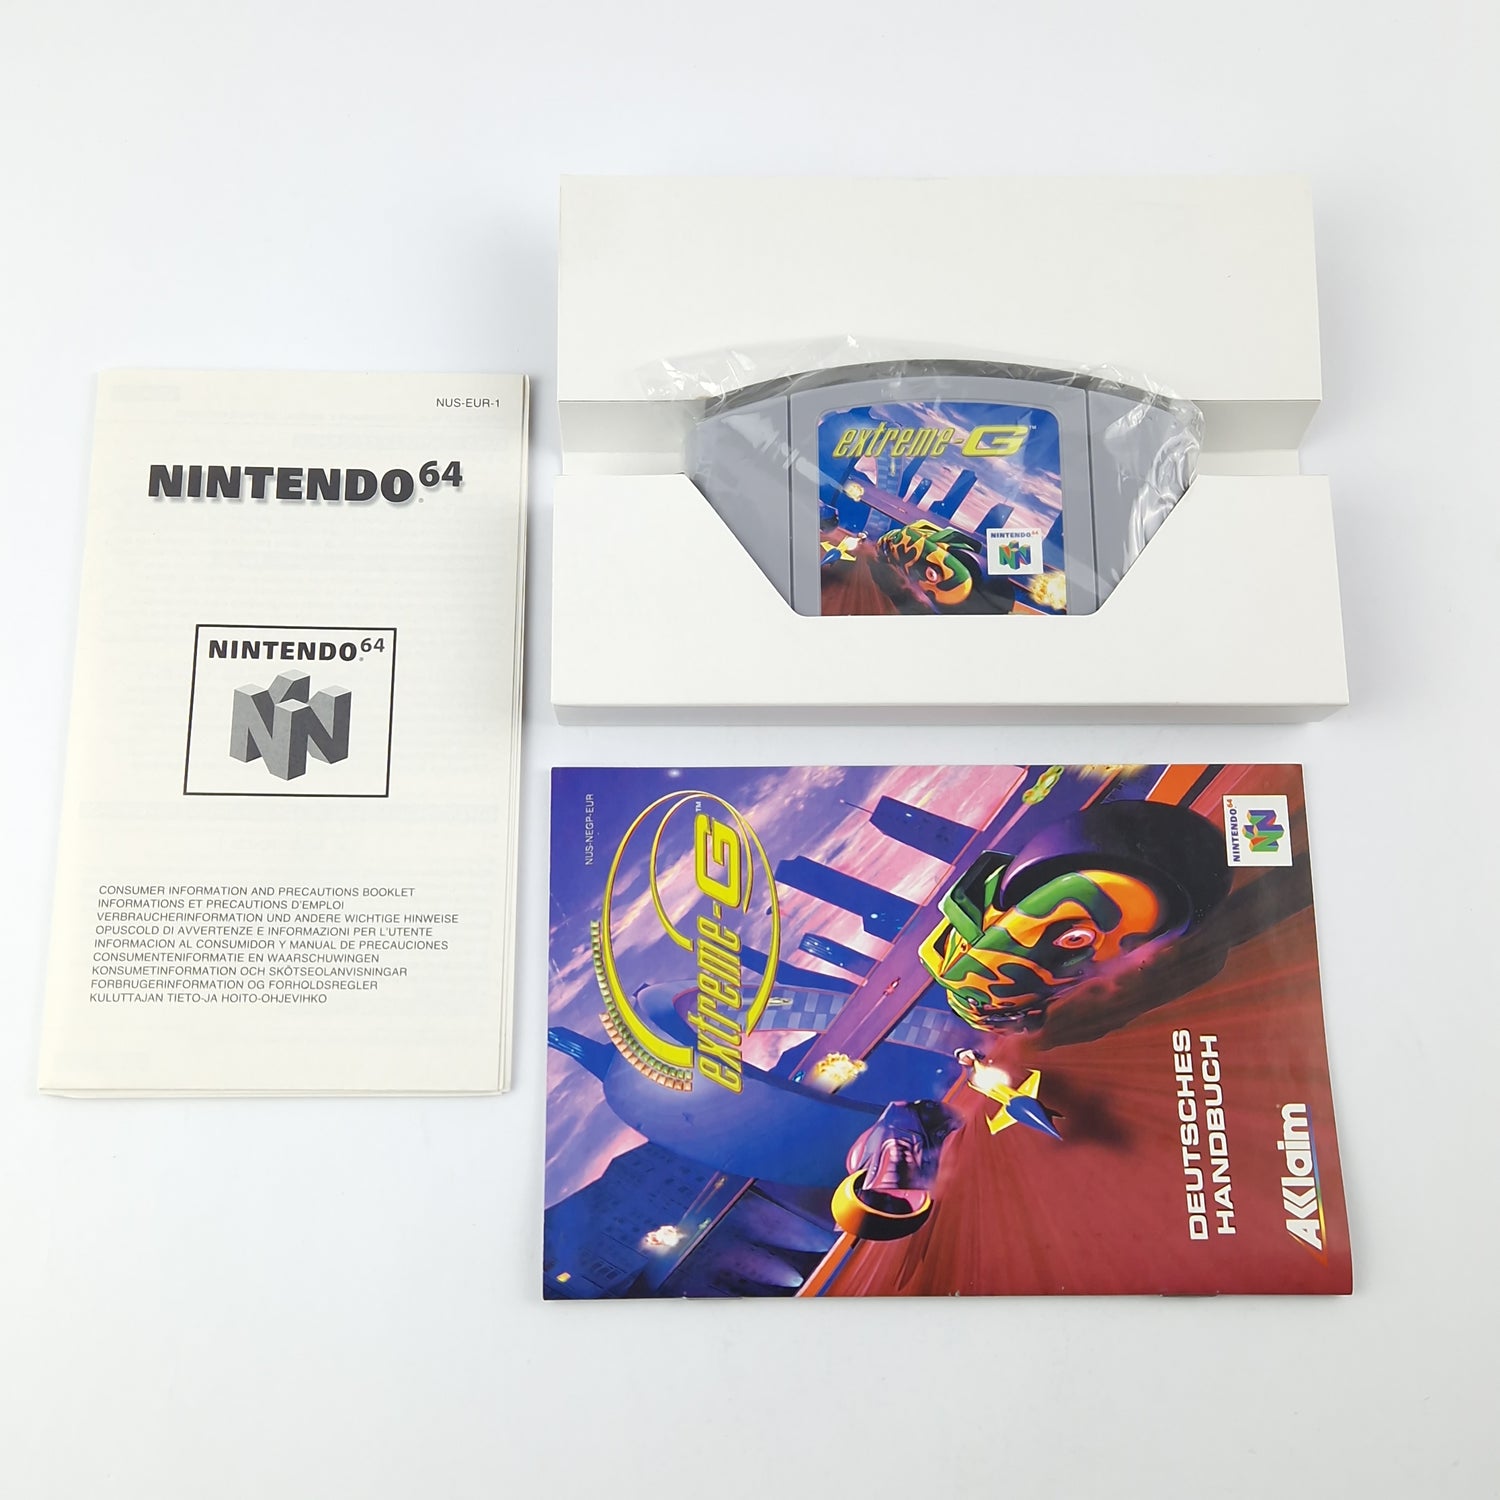 Nintendo 64 Game: Extreme-G - Module Instructions OVP CIB / N64 PAL